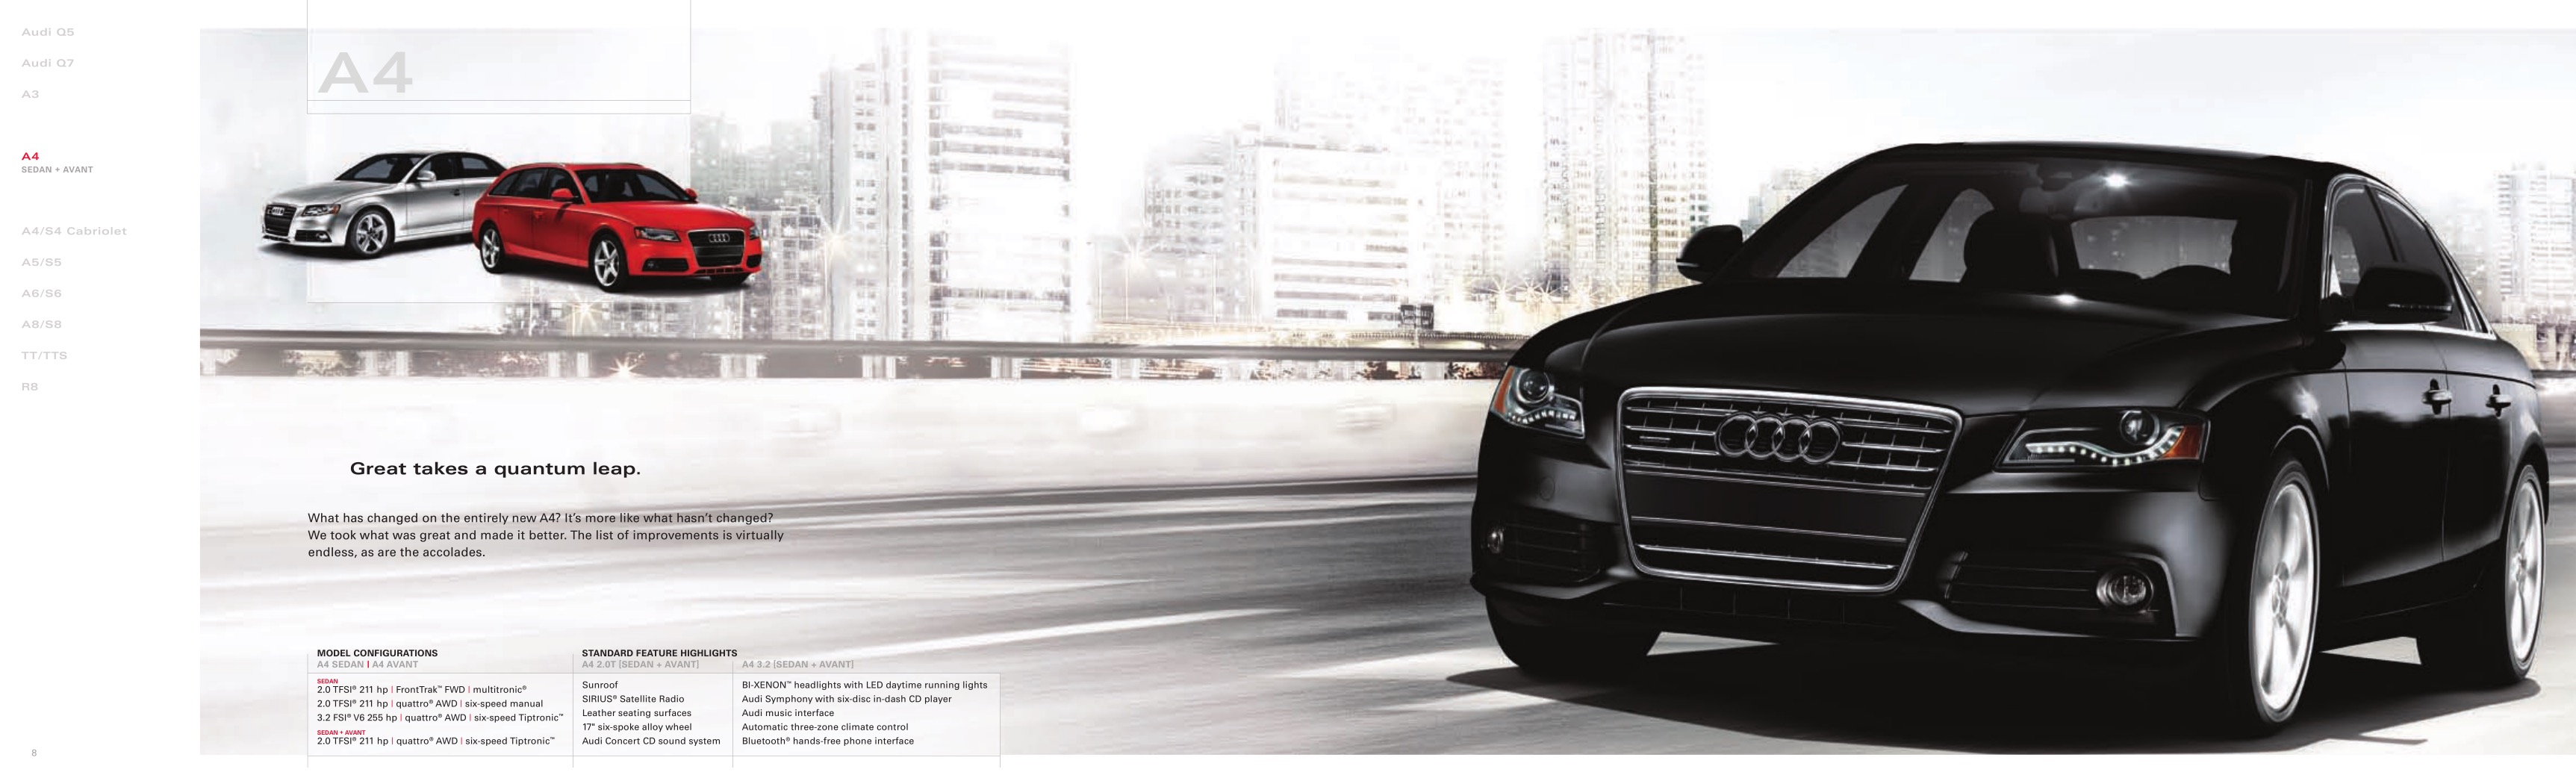 2009 Audi Brochure Page 15